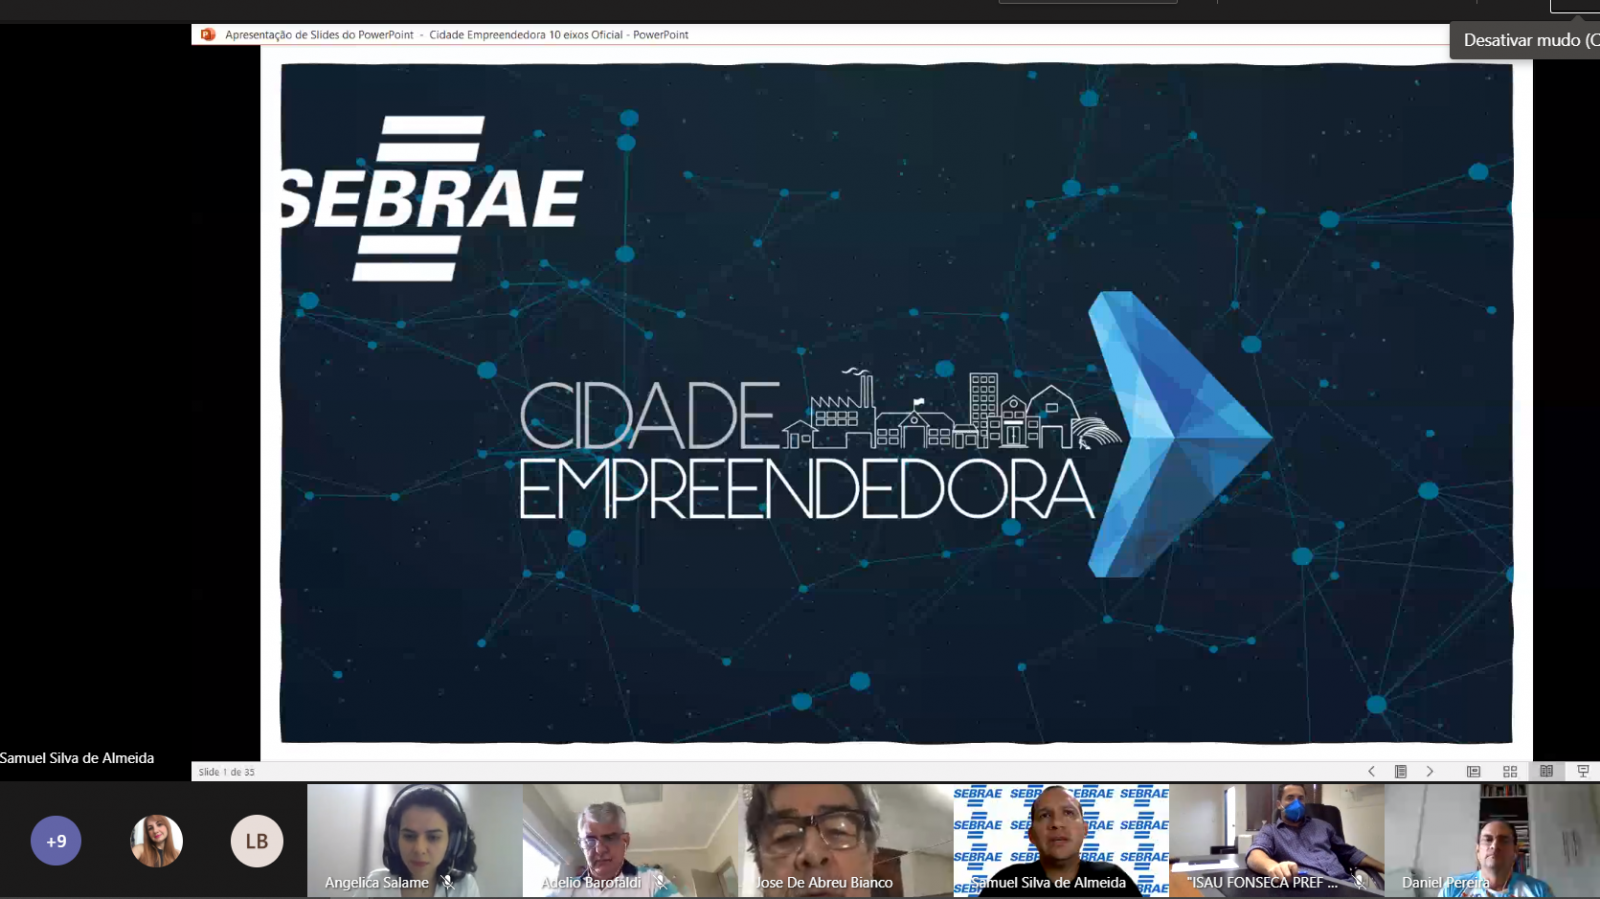 CIDADE EMPREENDEDORA - Importante programa do Sebrae estimula o empreendedorismo nos municípios - News Rondônia